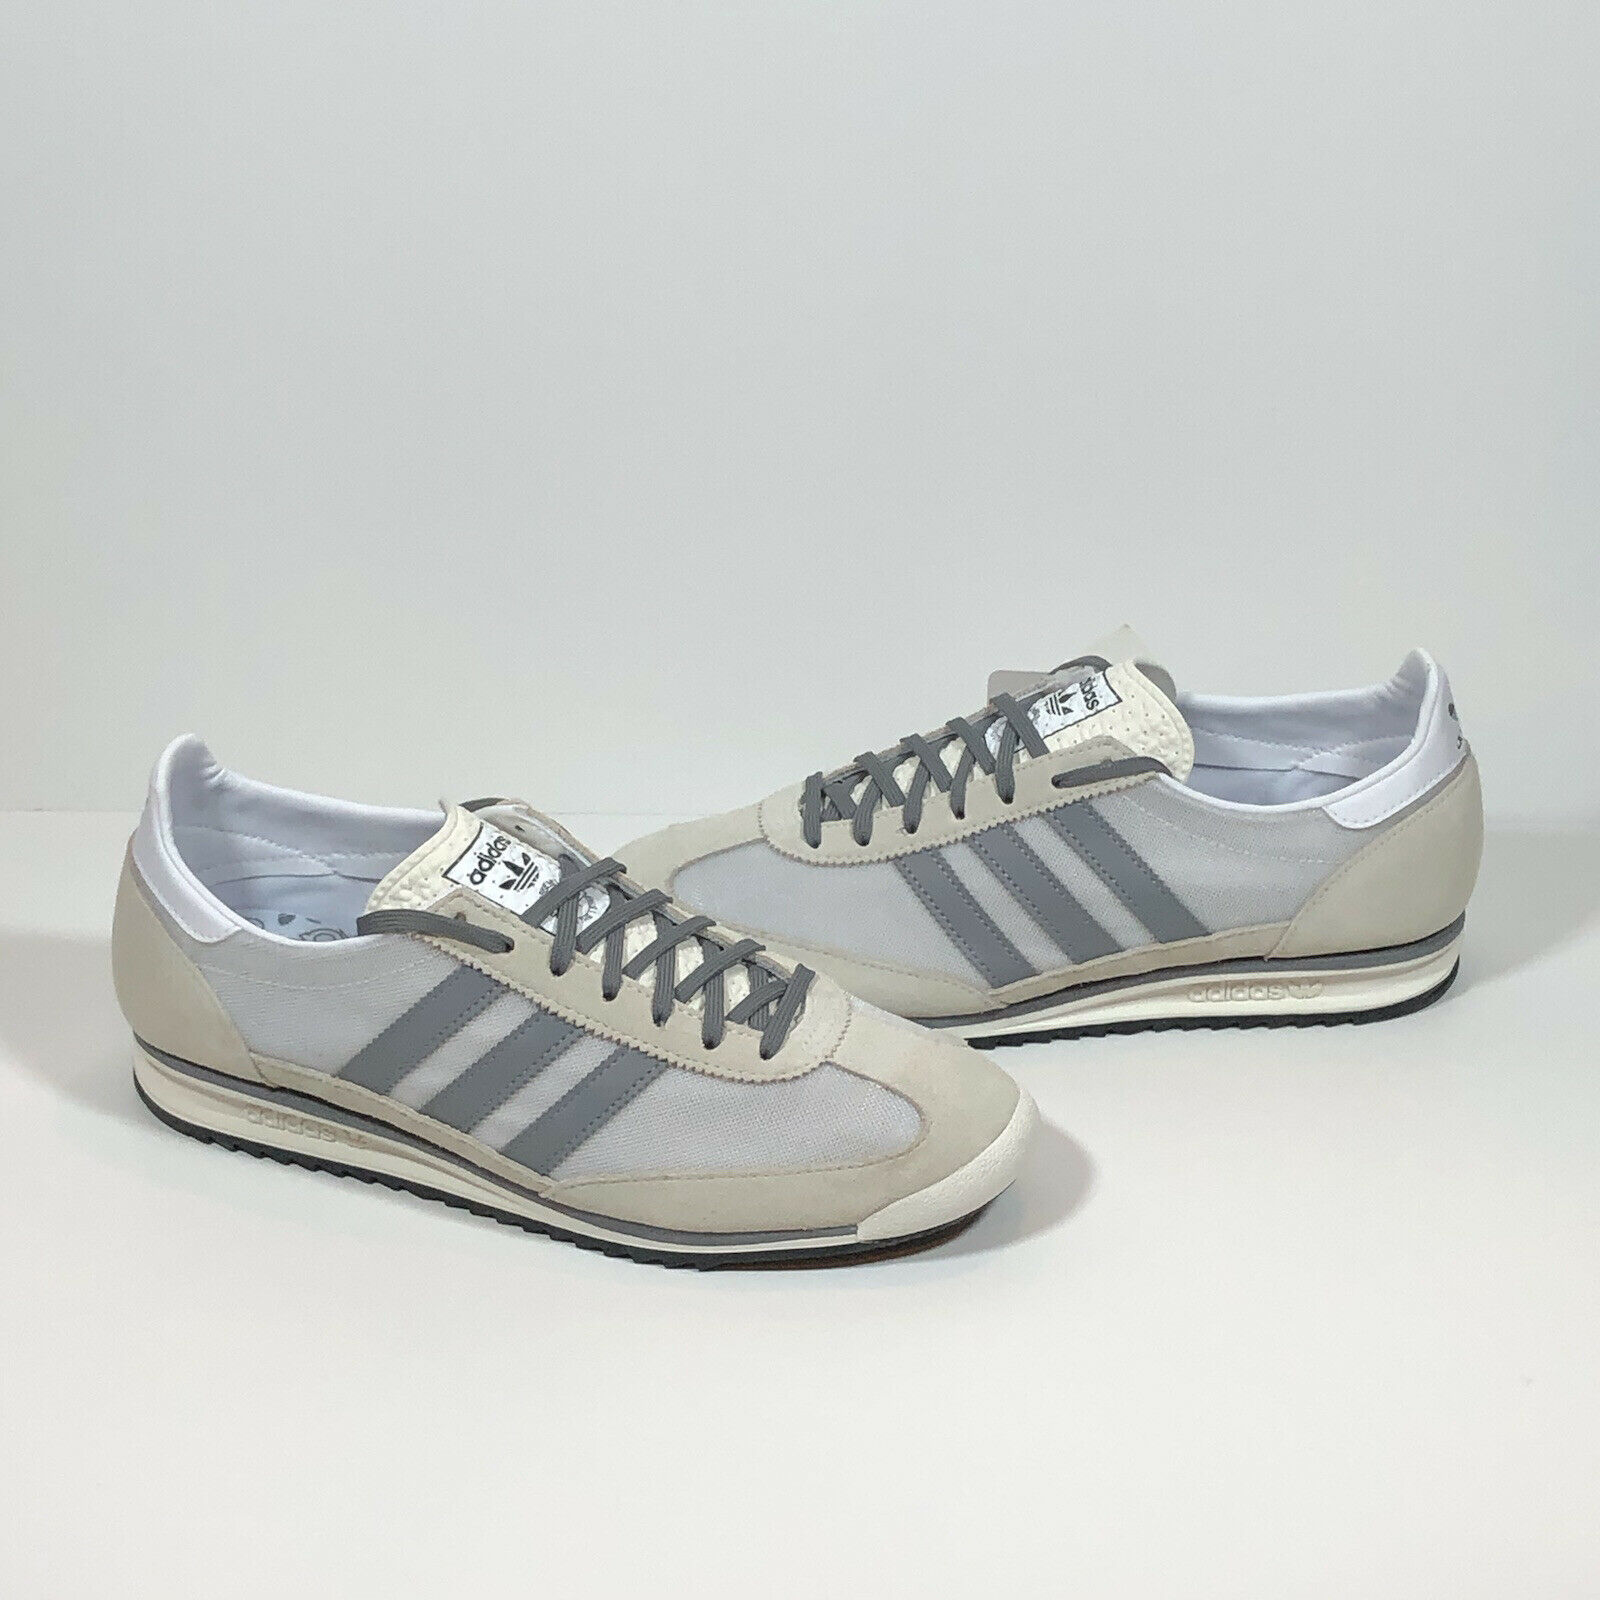 Adidas SL 72 Vintage Retro Shoes Gray White FV9785 Mens Size 11